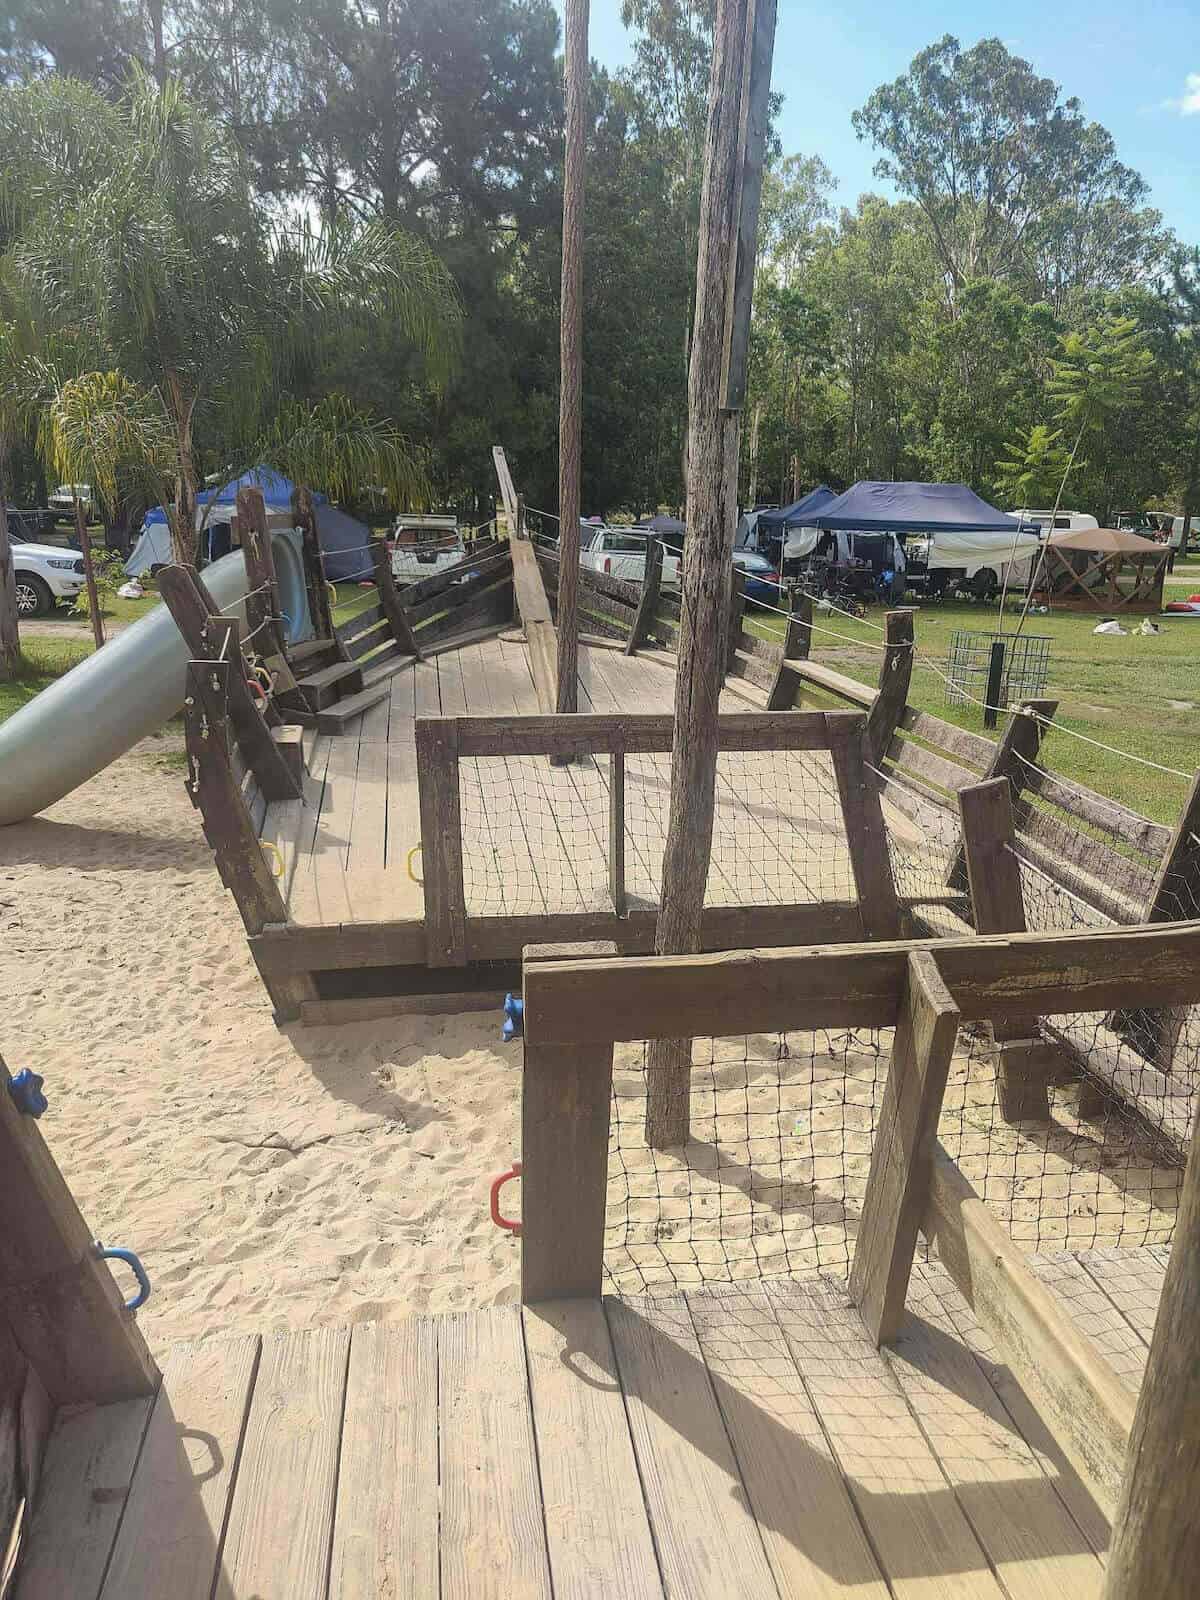 pirate ship playground at camping ground